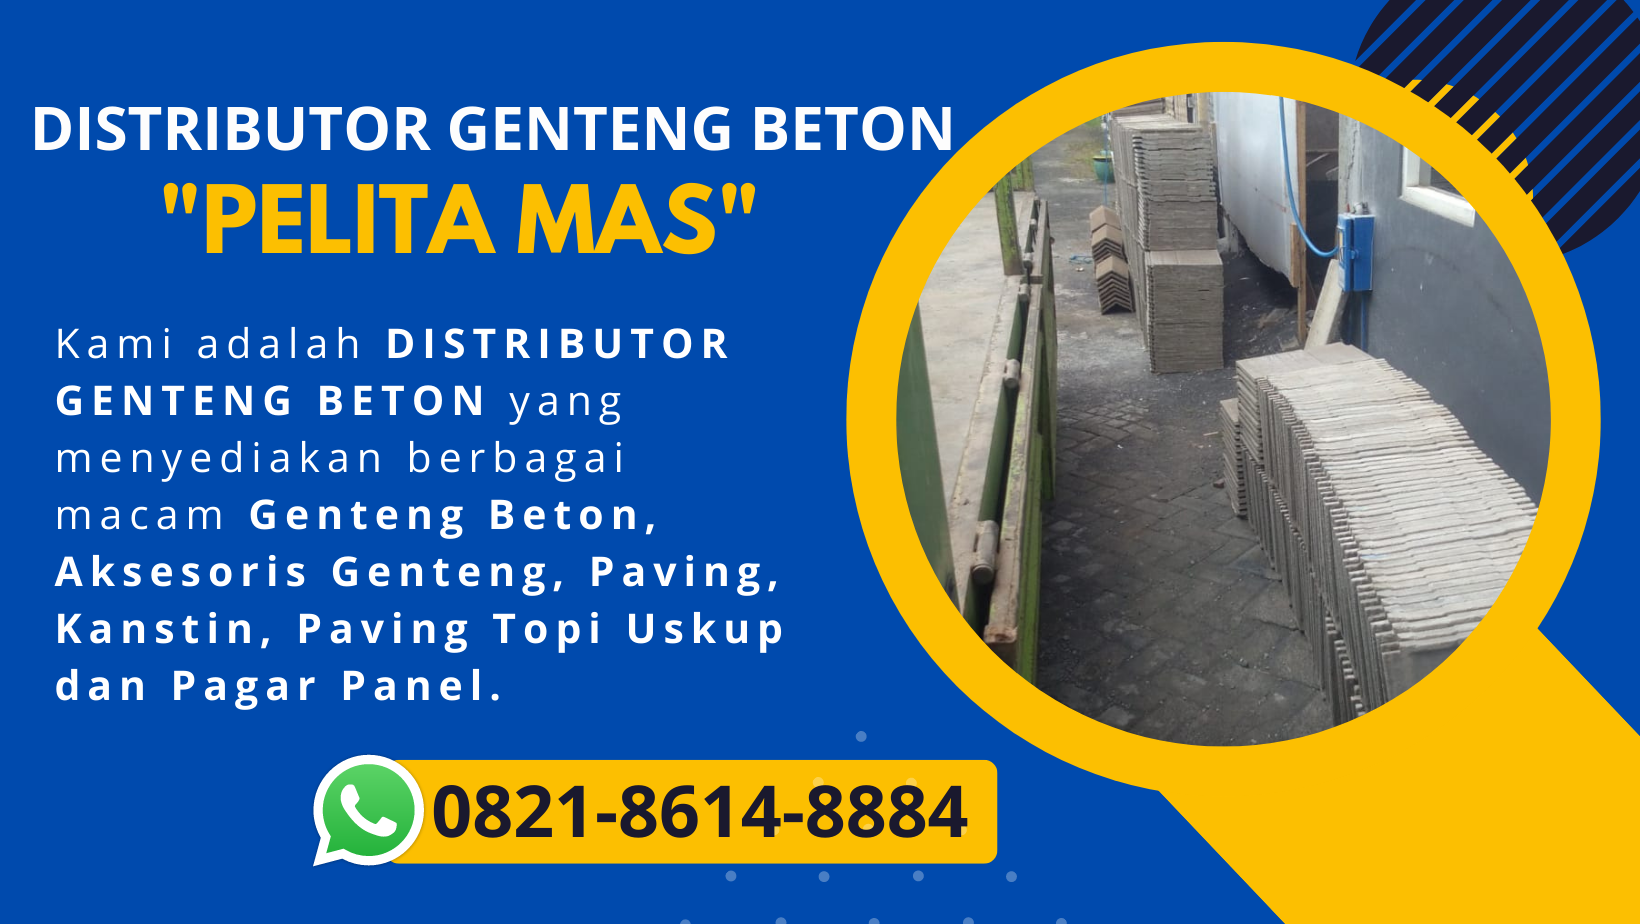 WA/TELP 0821-3296-1609, Jual Genteng Beton Flat Terdekat Di Surabaya